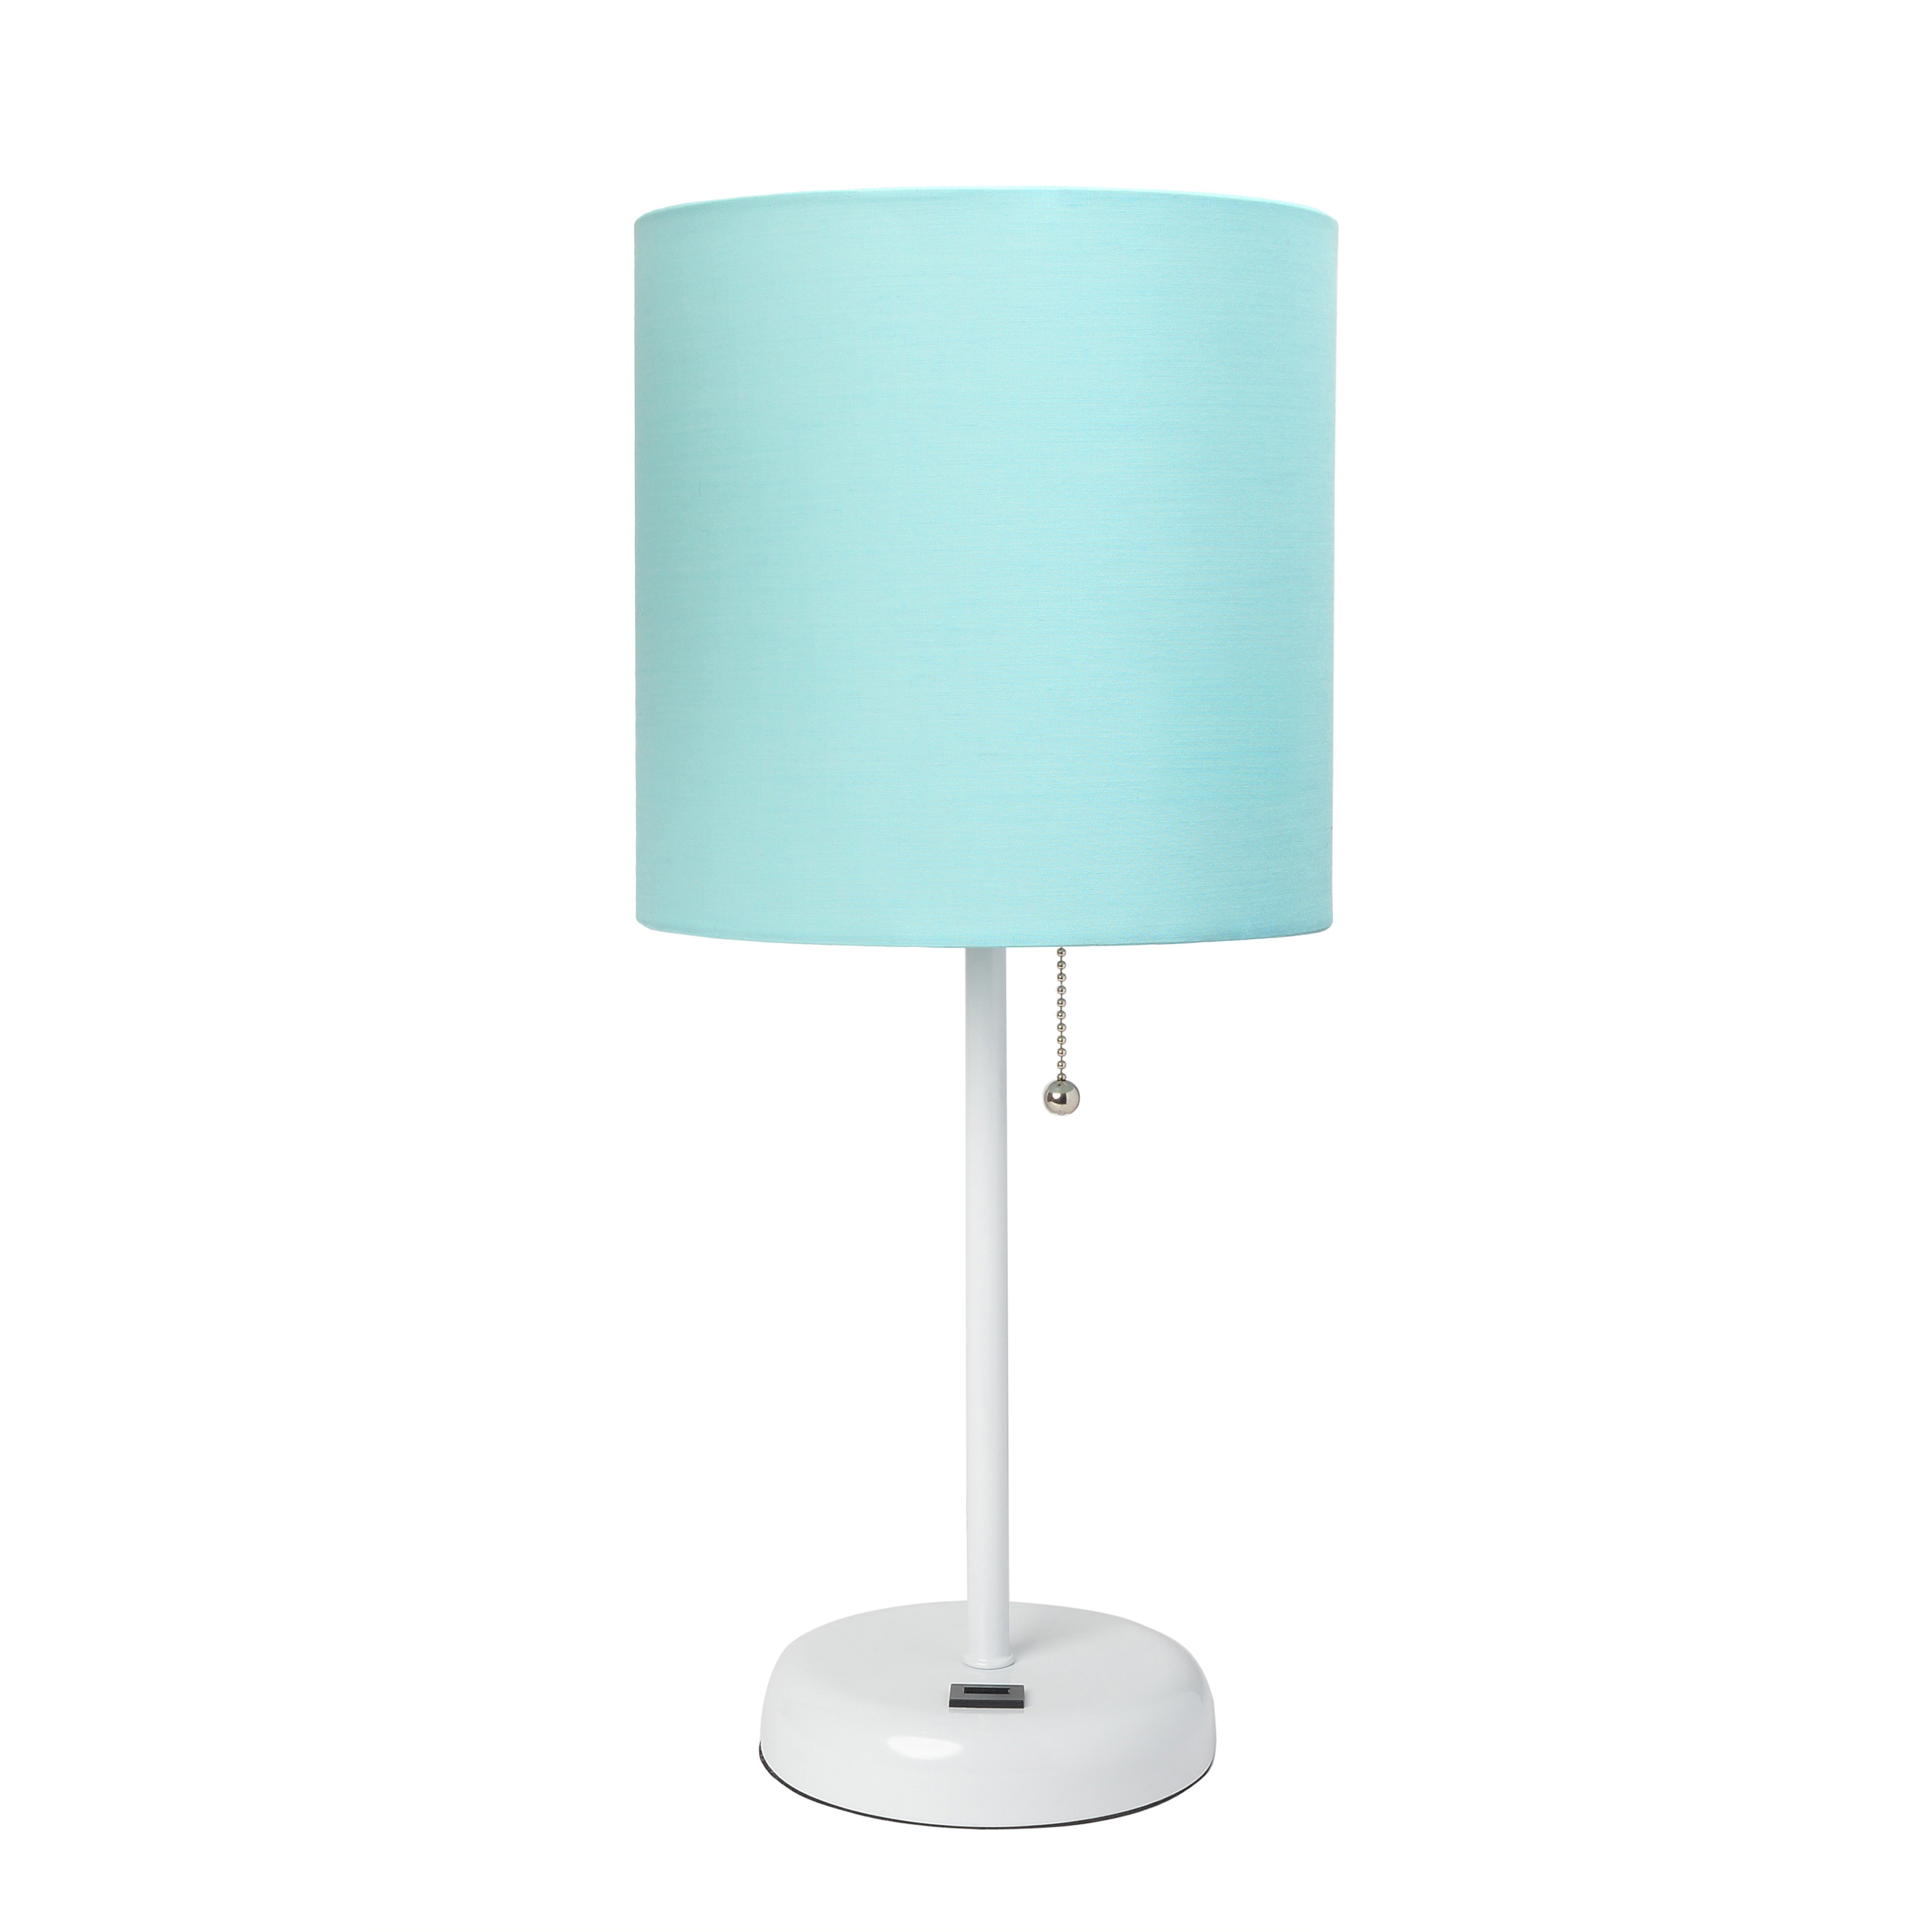 Aqua Table Lamp With Fabric Shade, Aqua Table Lamp Shade